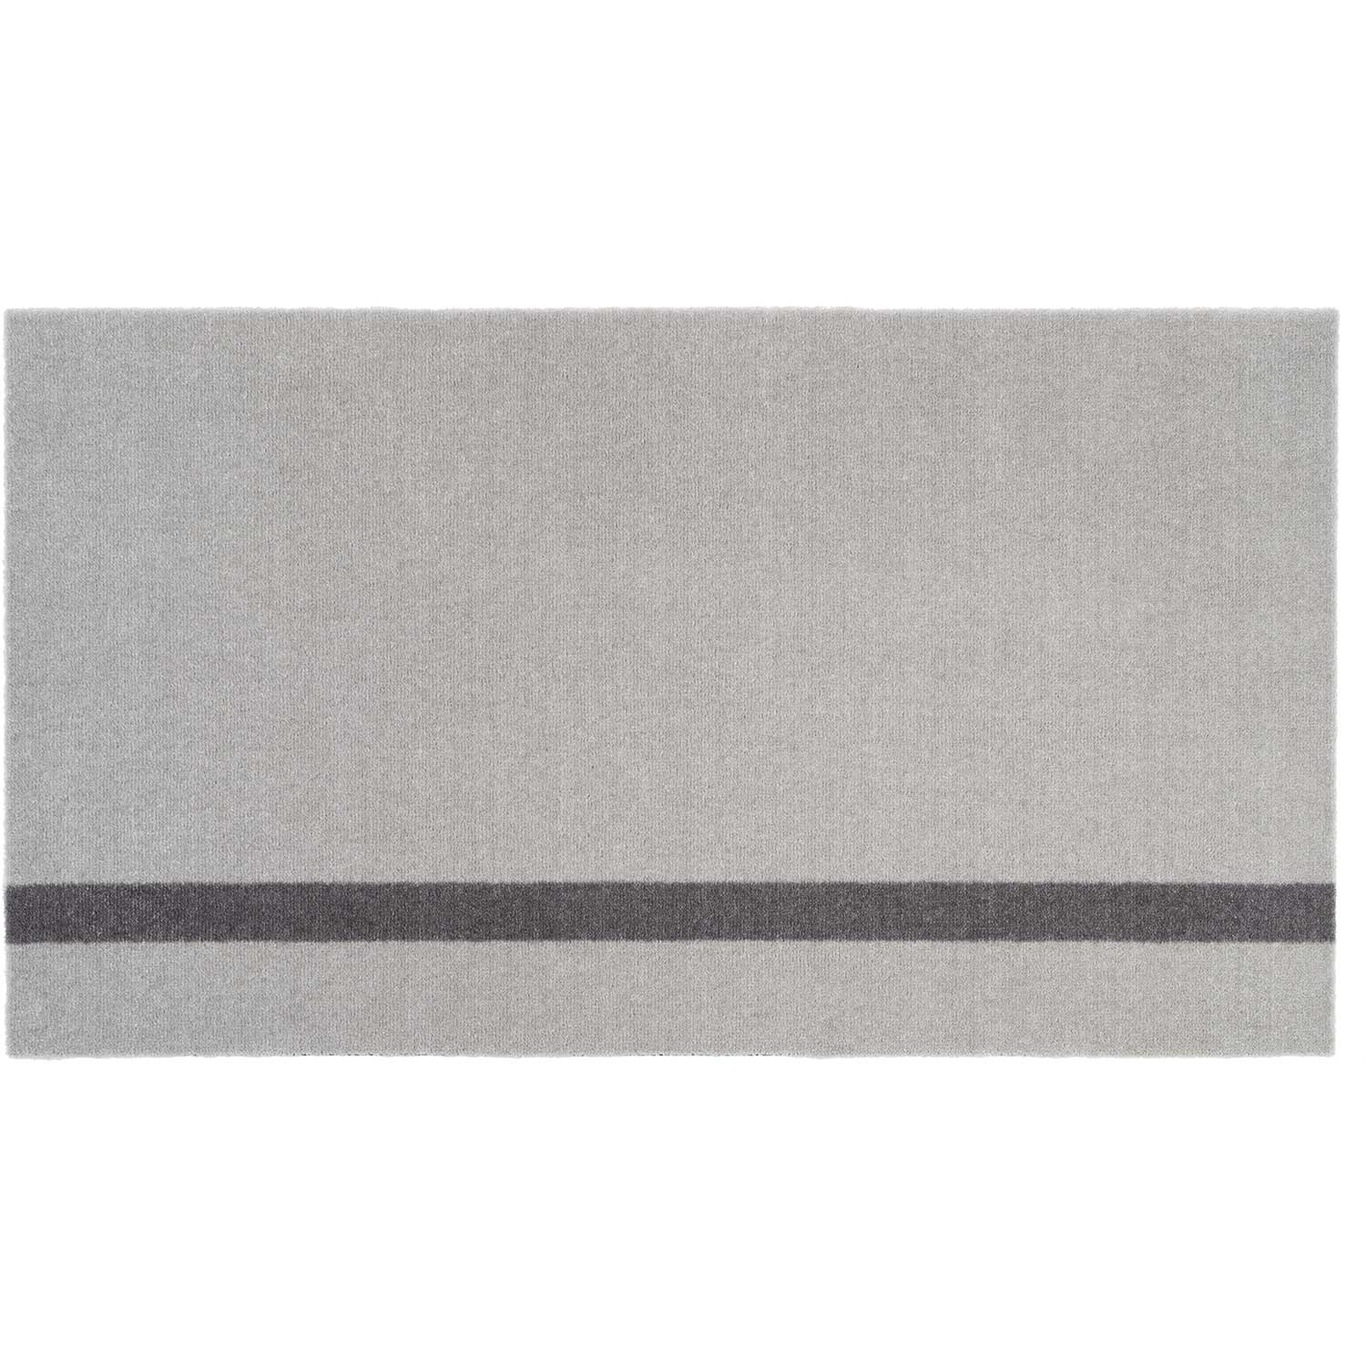 Stripes Vertikal Teppich Hellgrau / Steel Grey, 67x120 cm